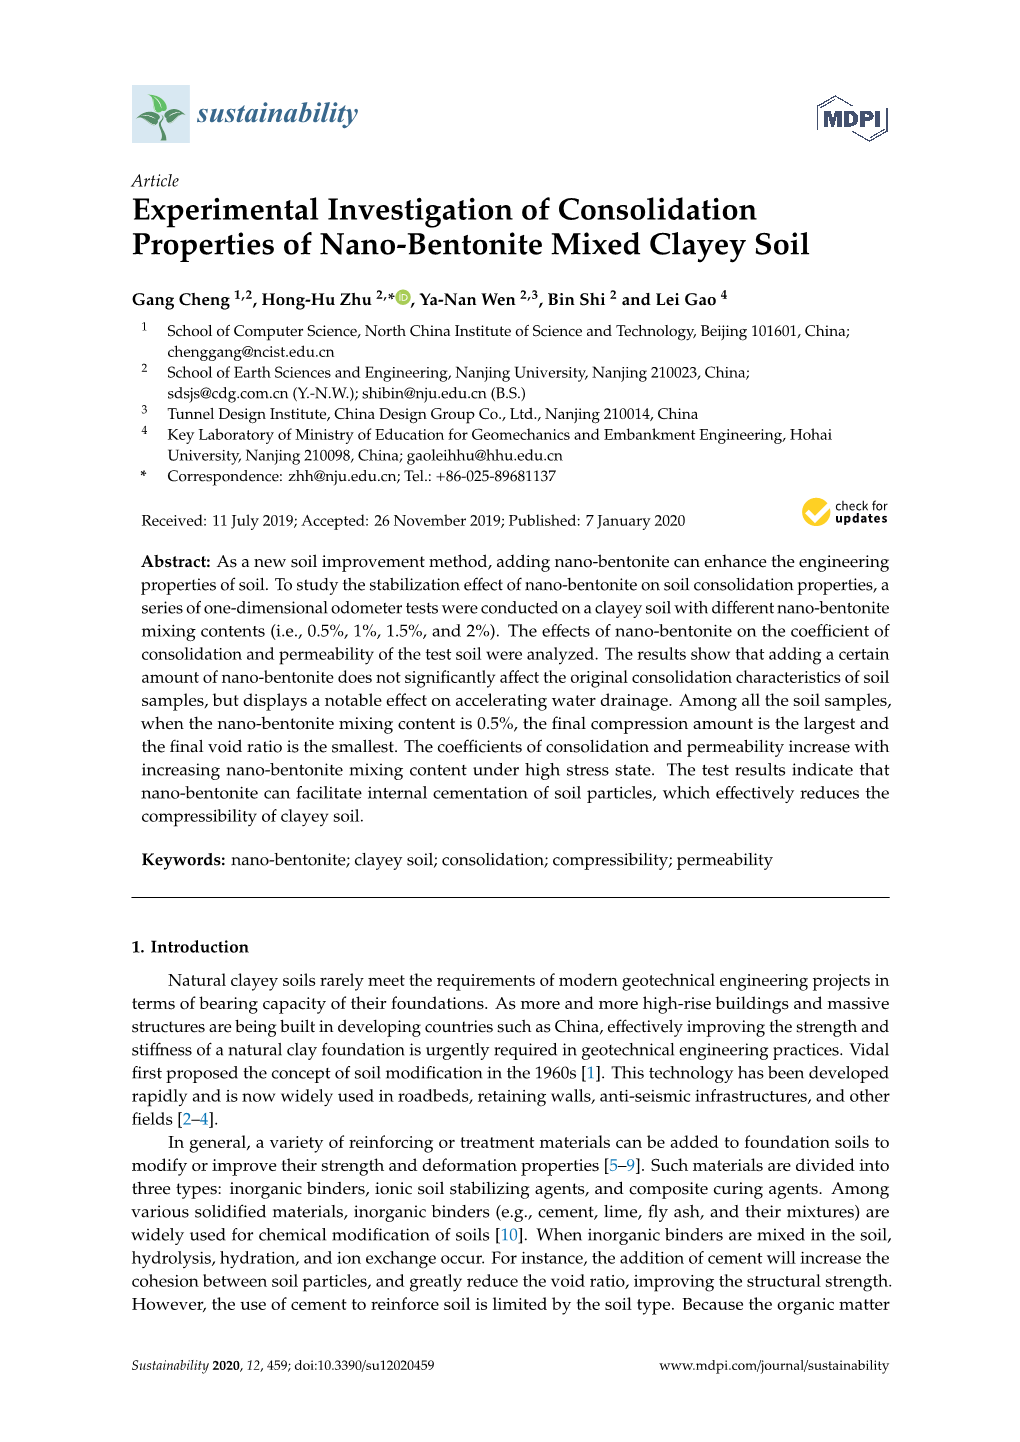 Experimental Investigation of Consolidation Properties of Nano-Bentonite Mixed Clayey Soil